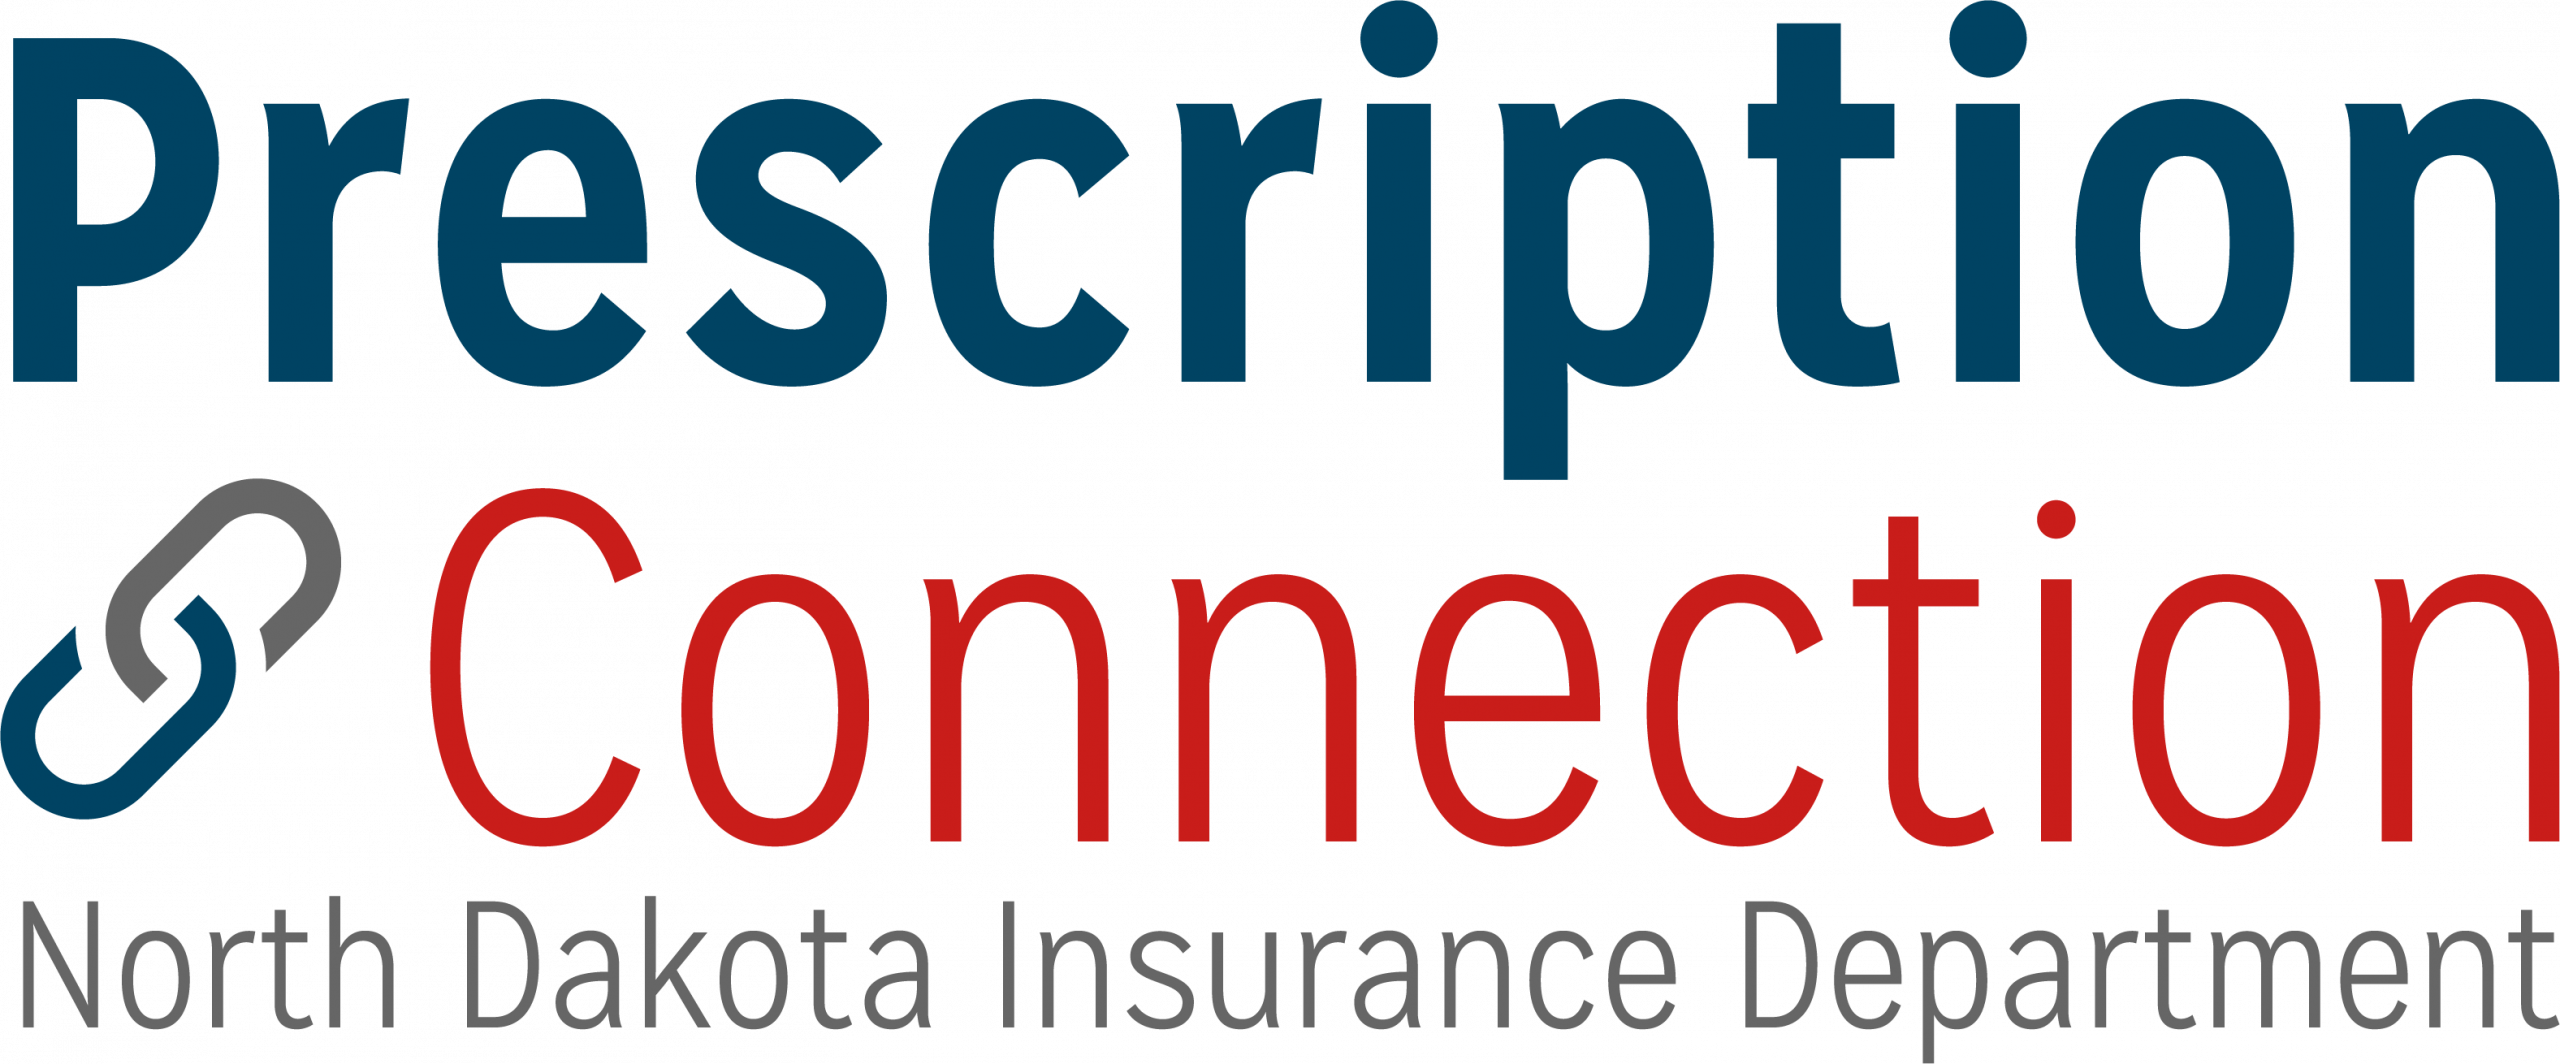 Prescription Connection - North Dakota Insurance Department